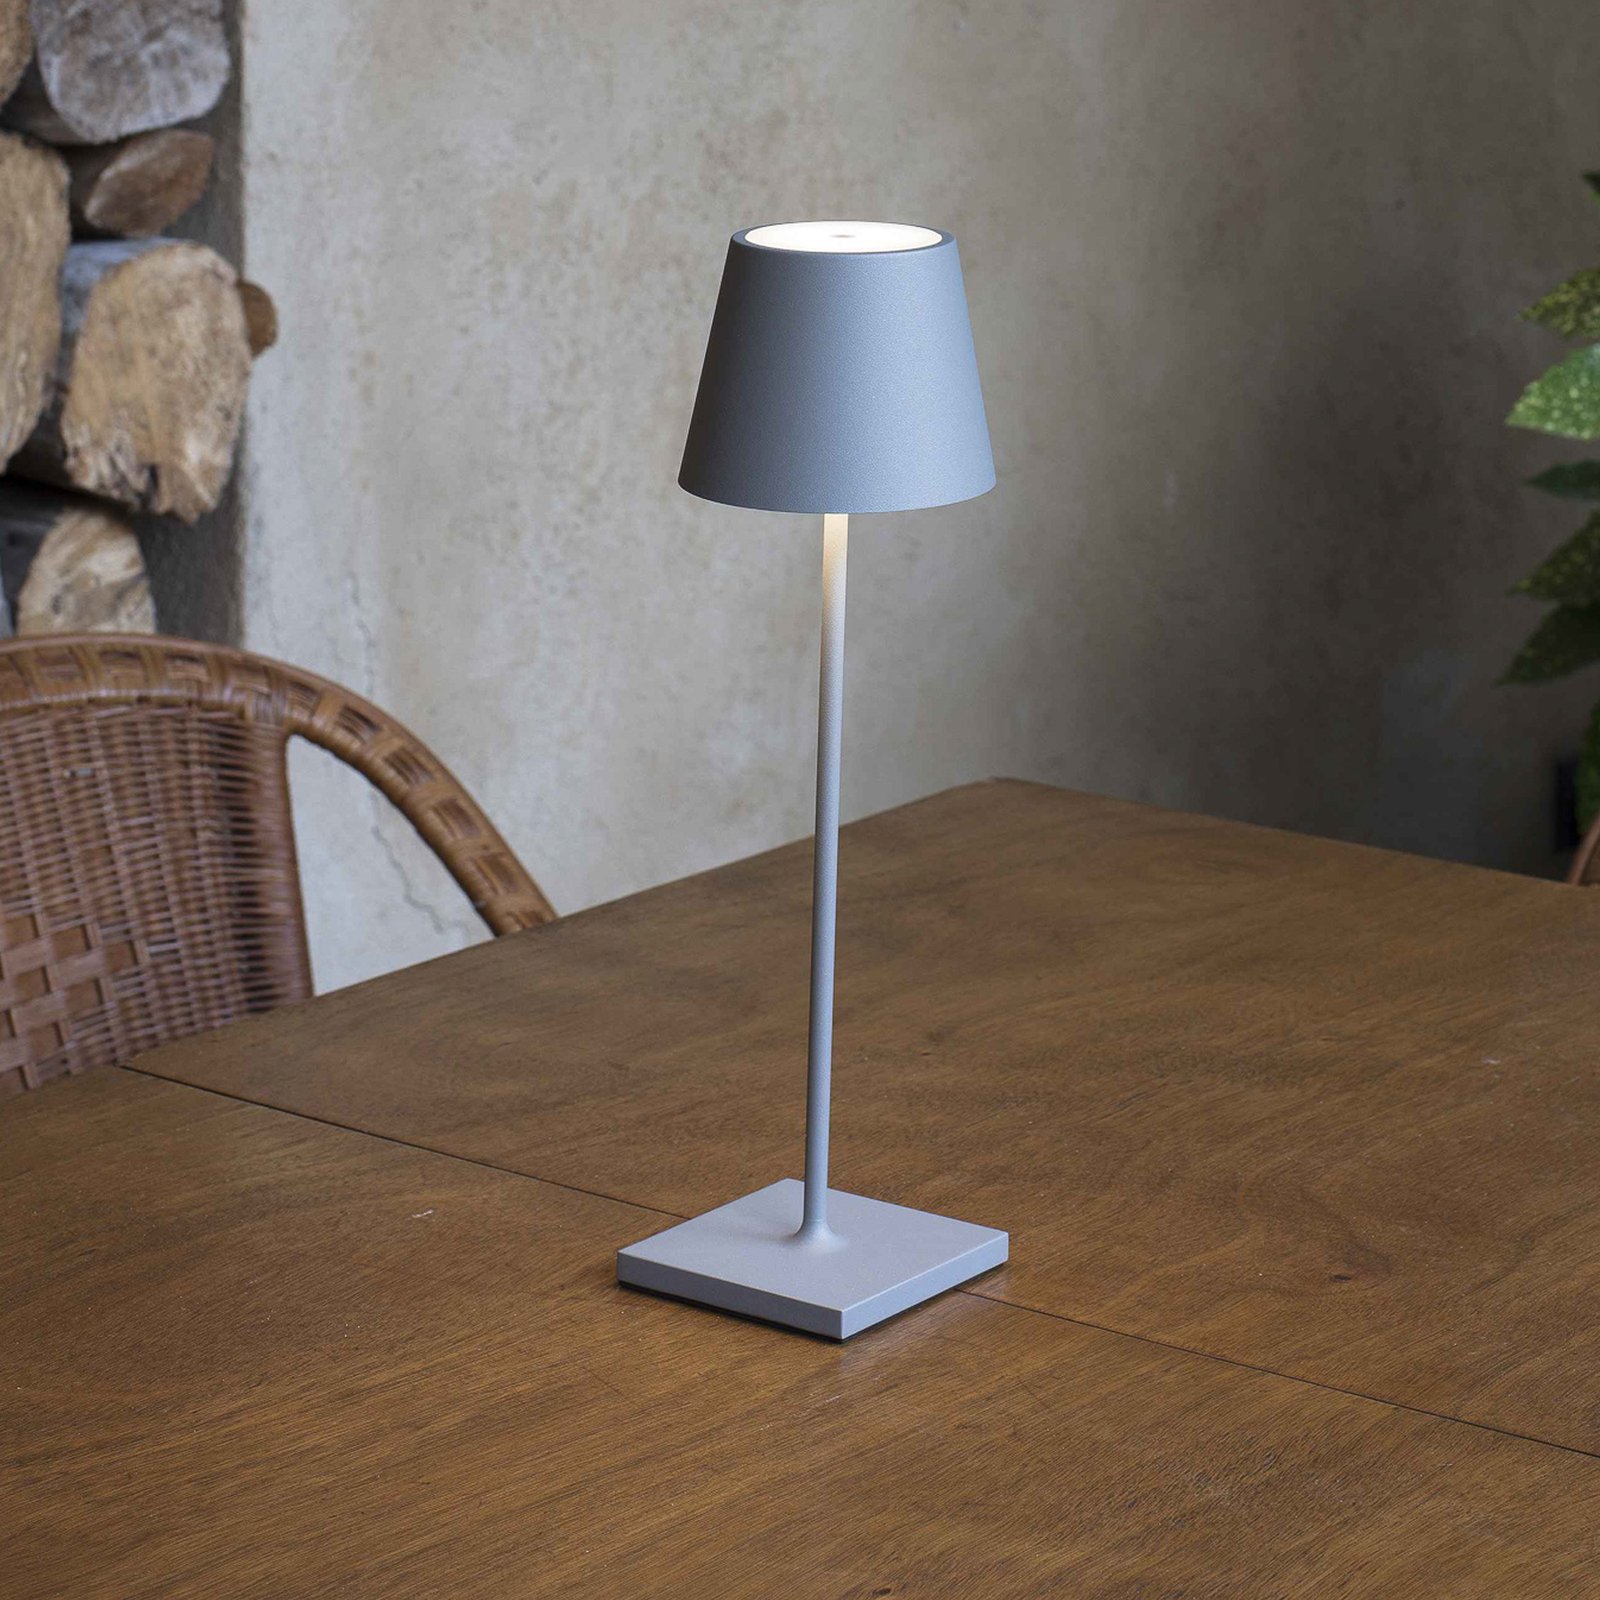 Lampa stołowa LED Toc ładowarka USB, IP54, szara